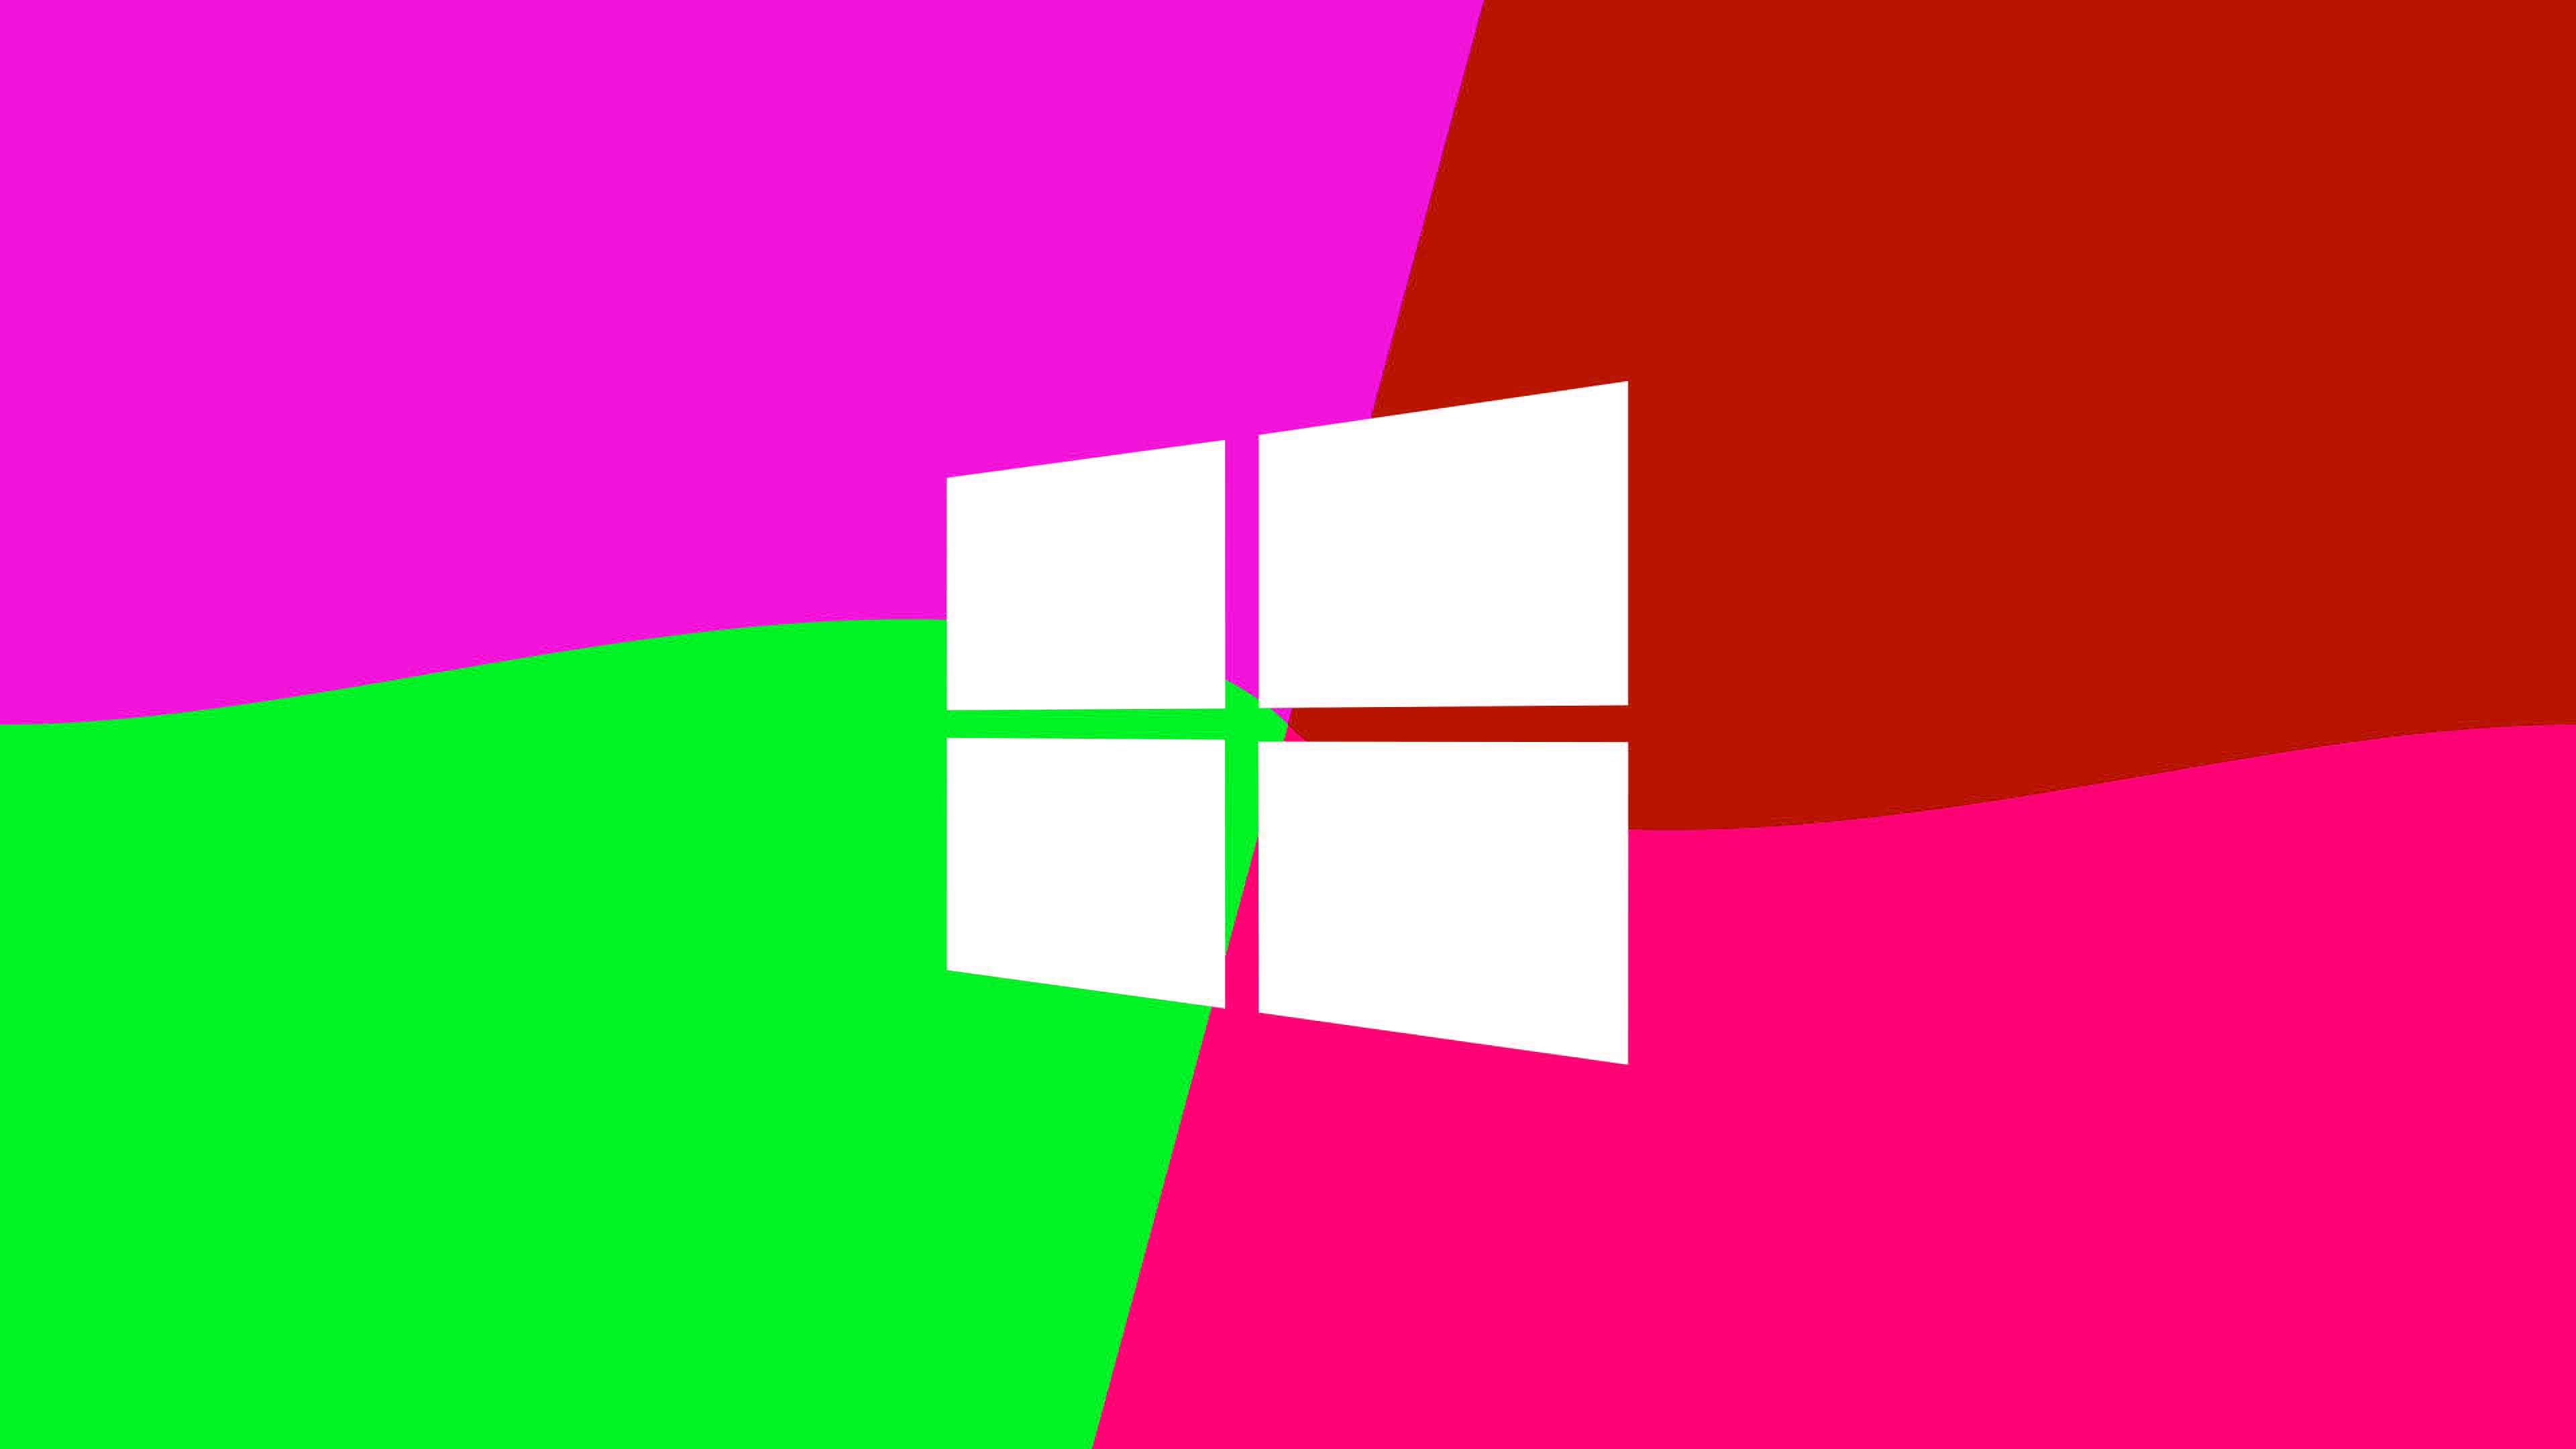 Windows 10 4k Backgrounds - Windows 10 Backgrounds 4k - HD Wallpaper 